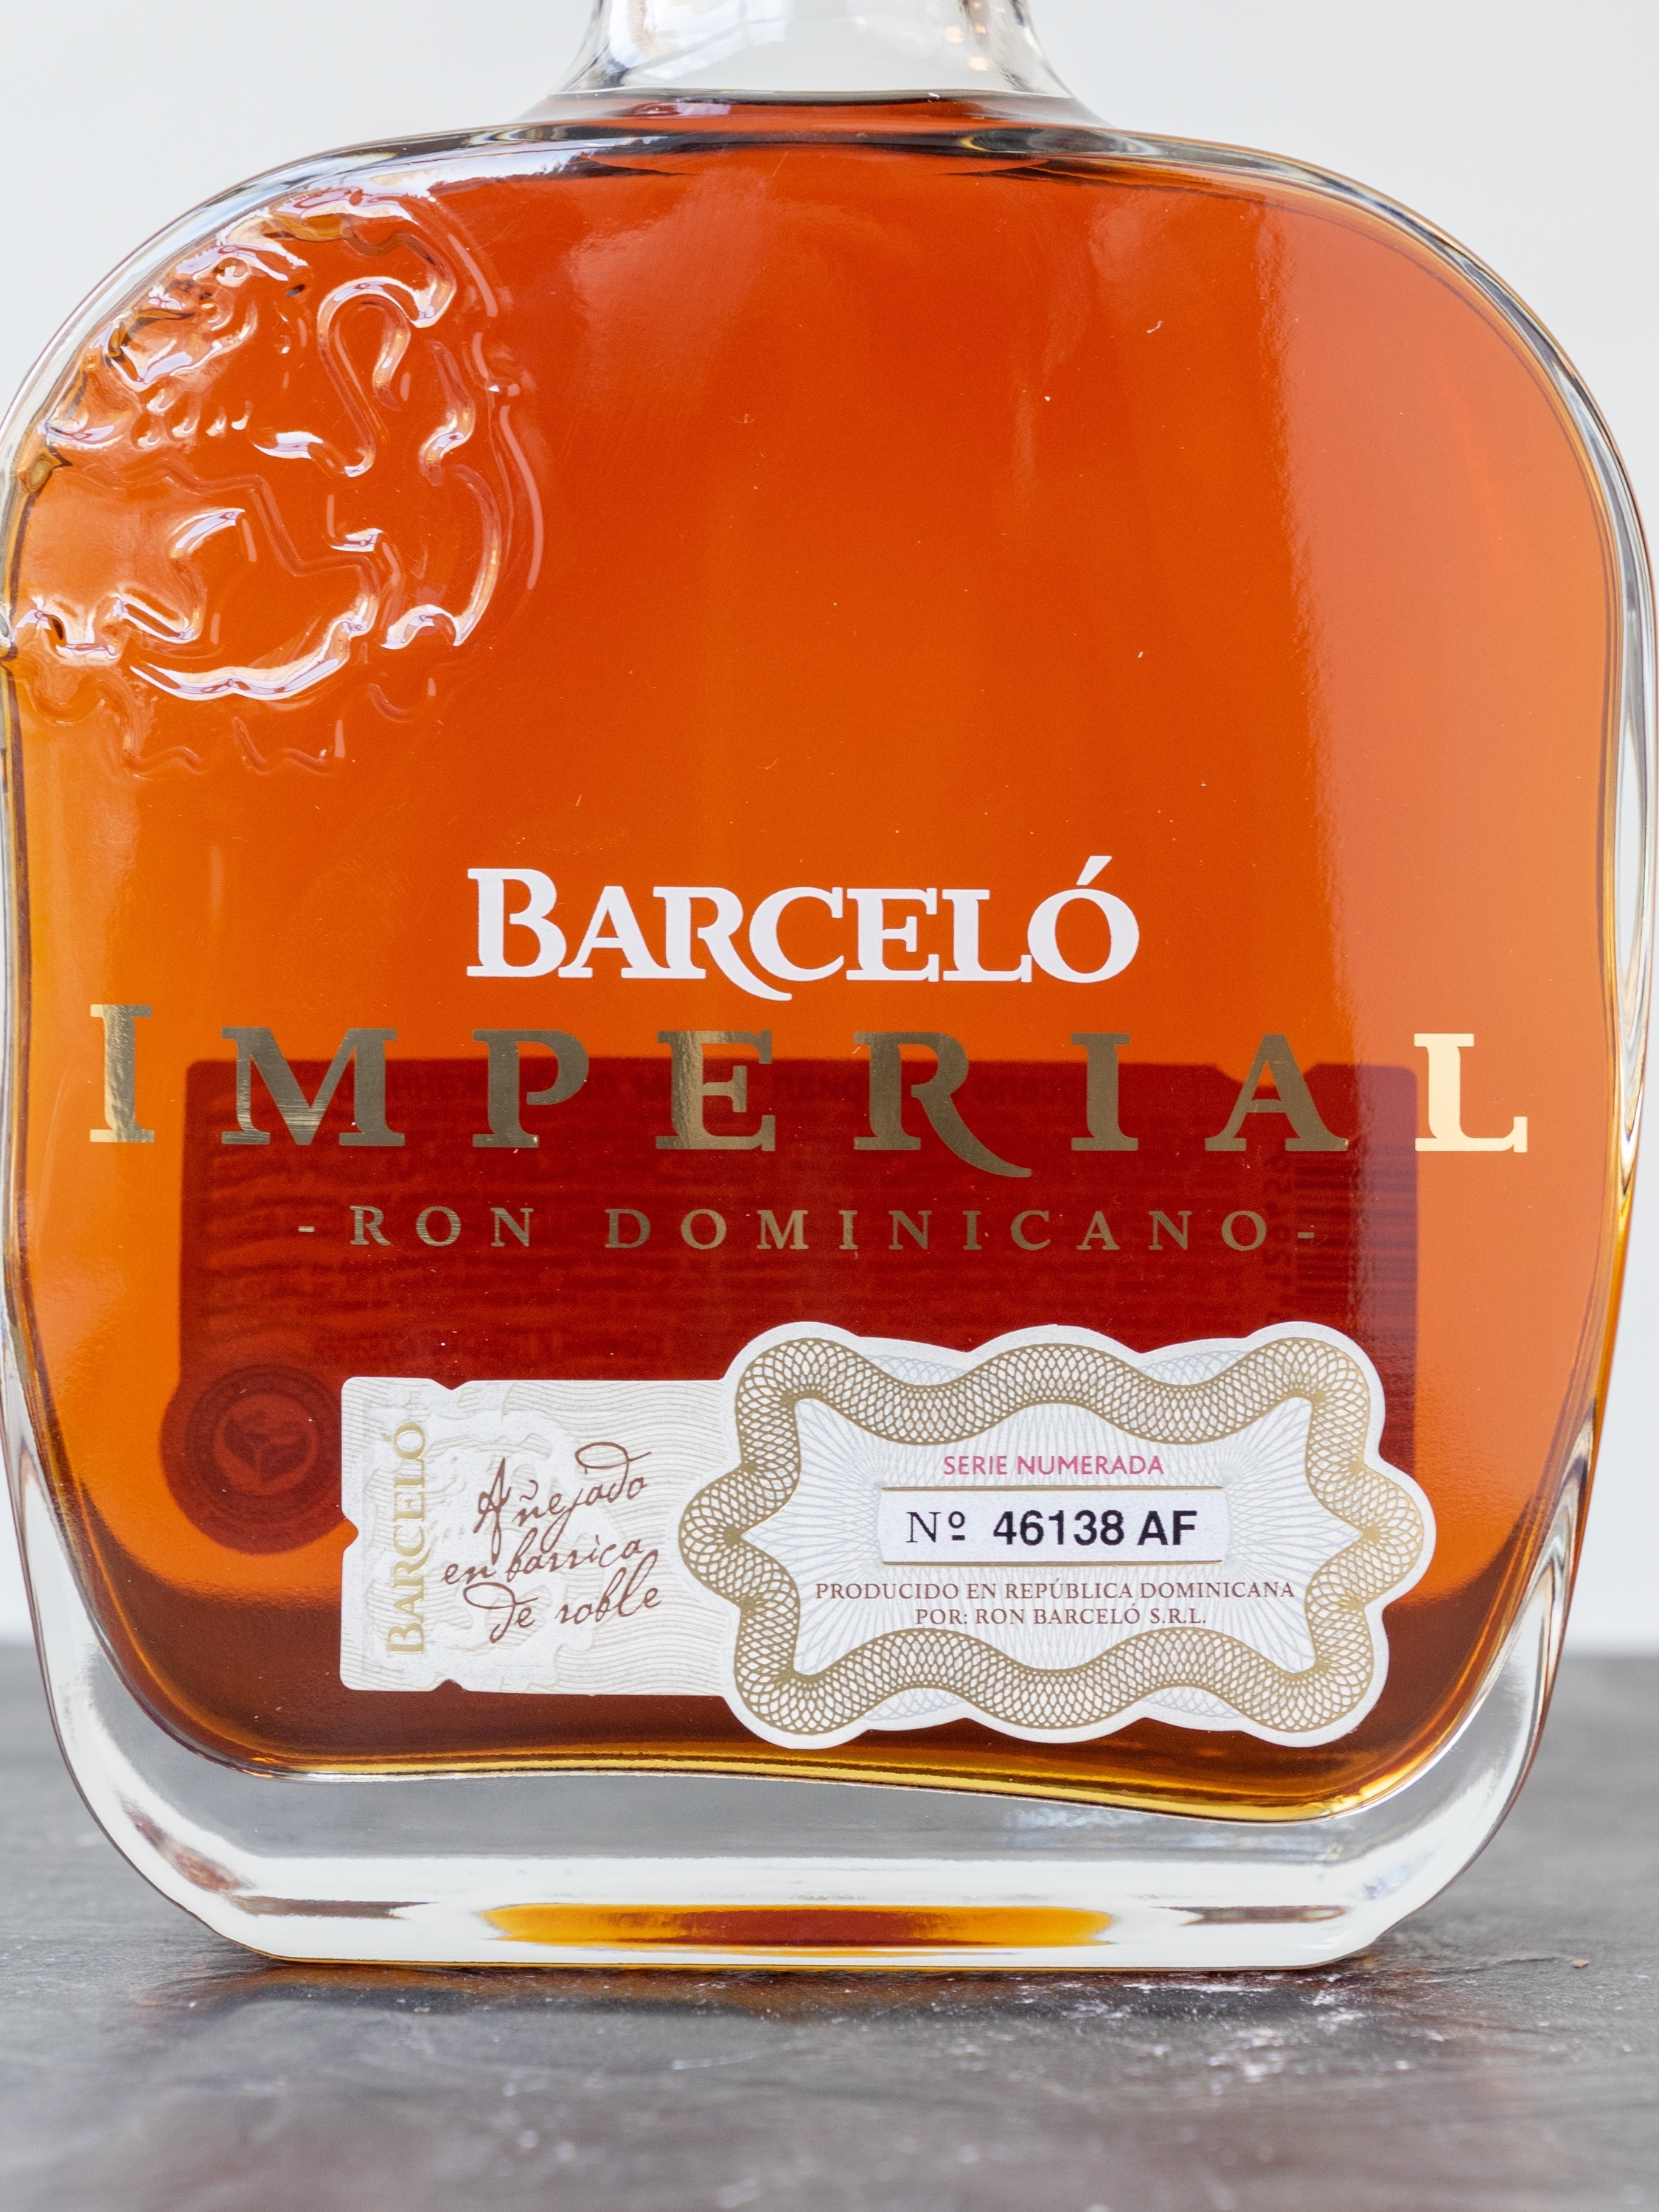 Barcelo imperial 0.7 цена. Ром Барсело Империал. Дон Барсело Империал Ром. Ром Барсело Империал 10 лет. Ром Барсело 1 литр.